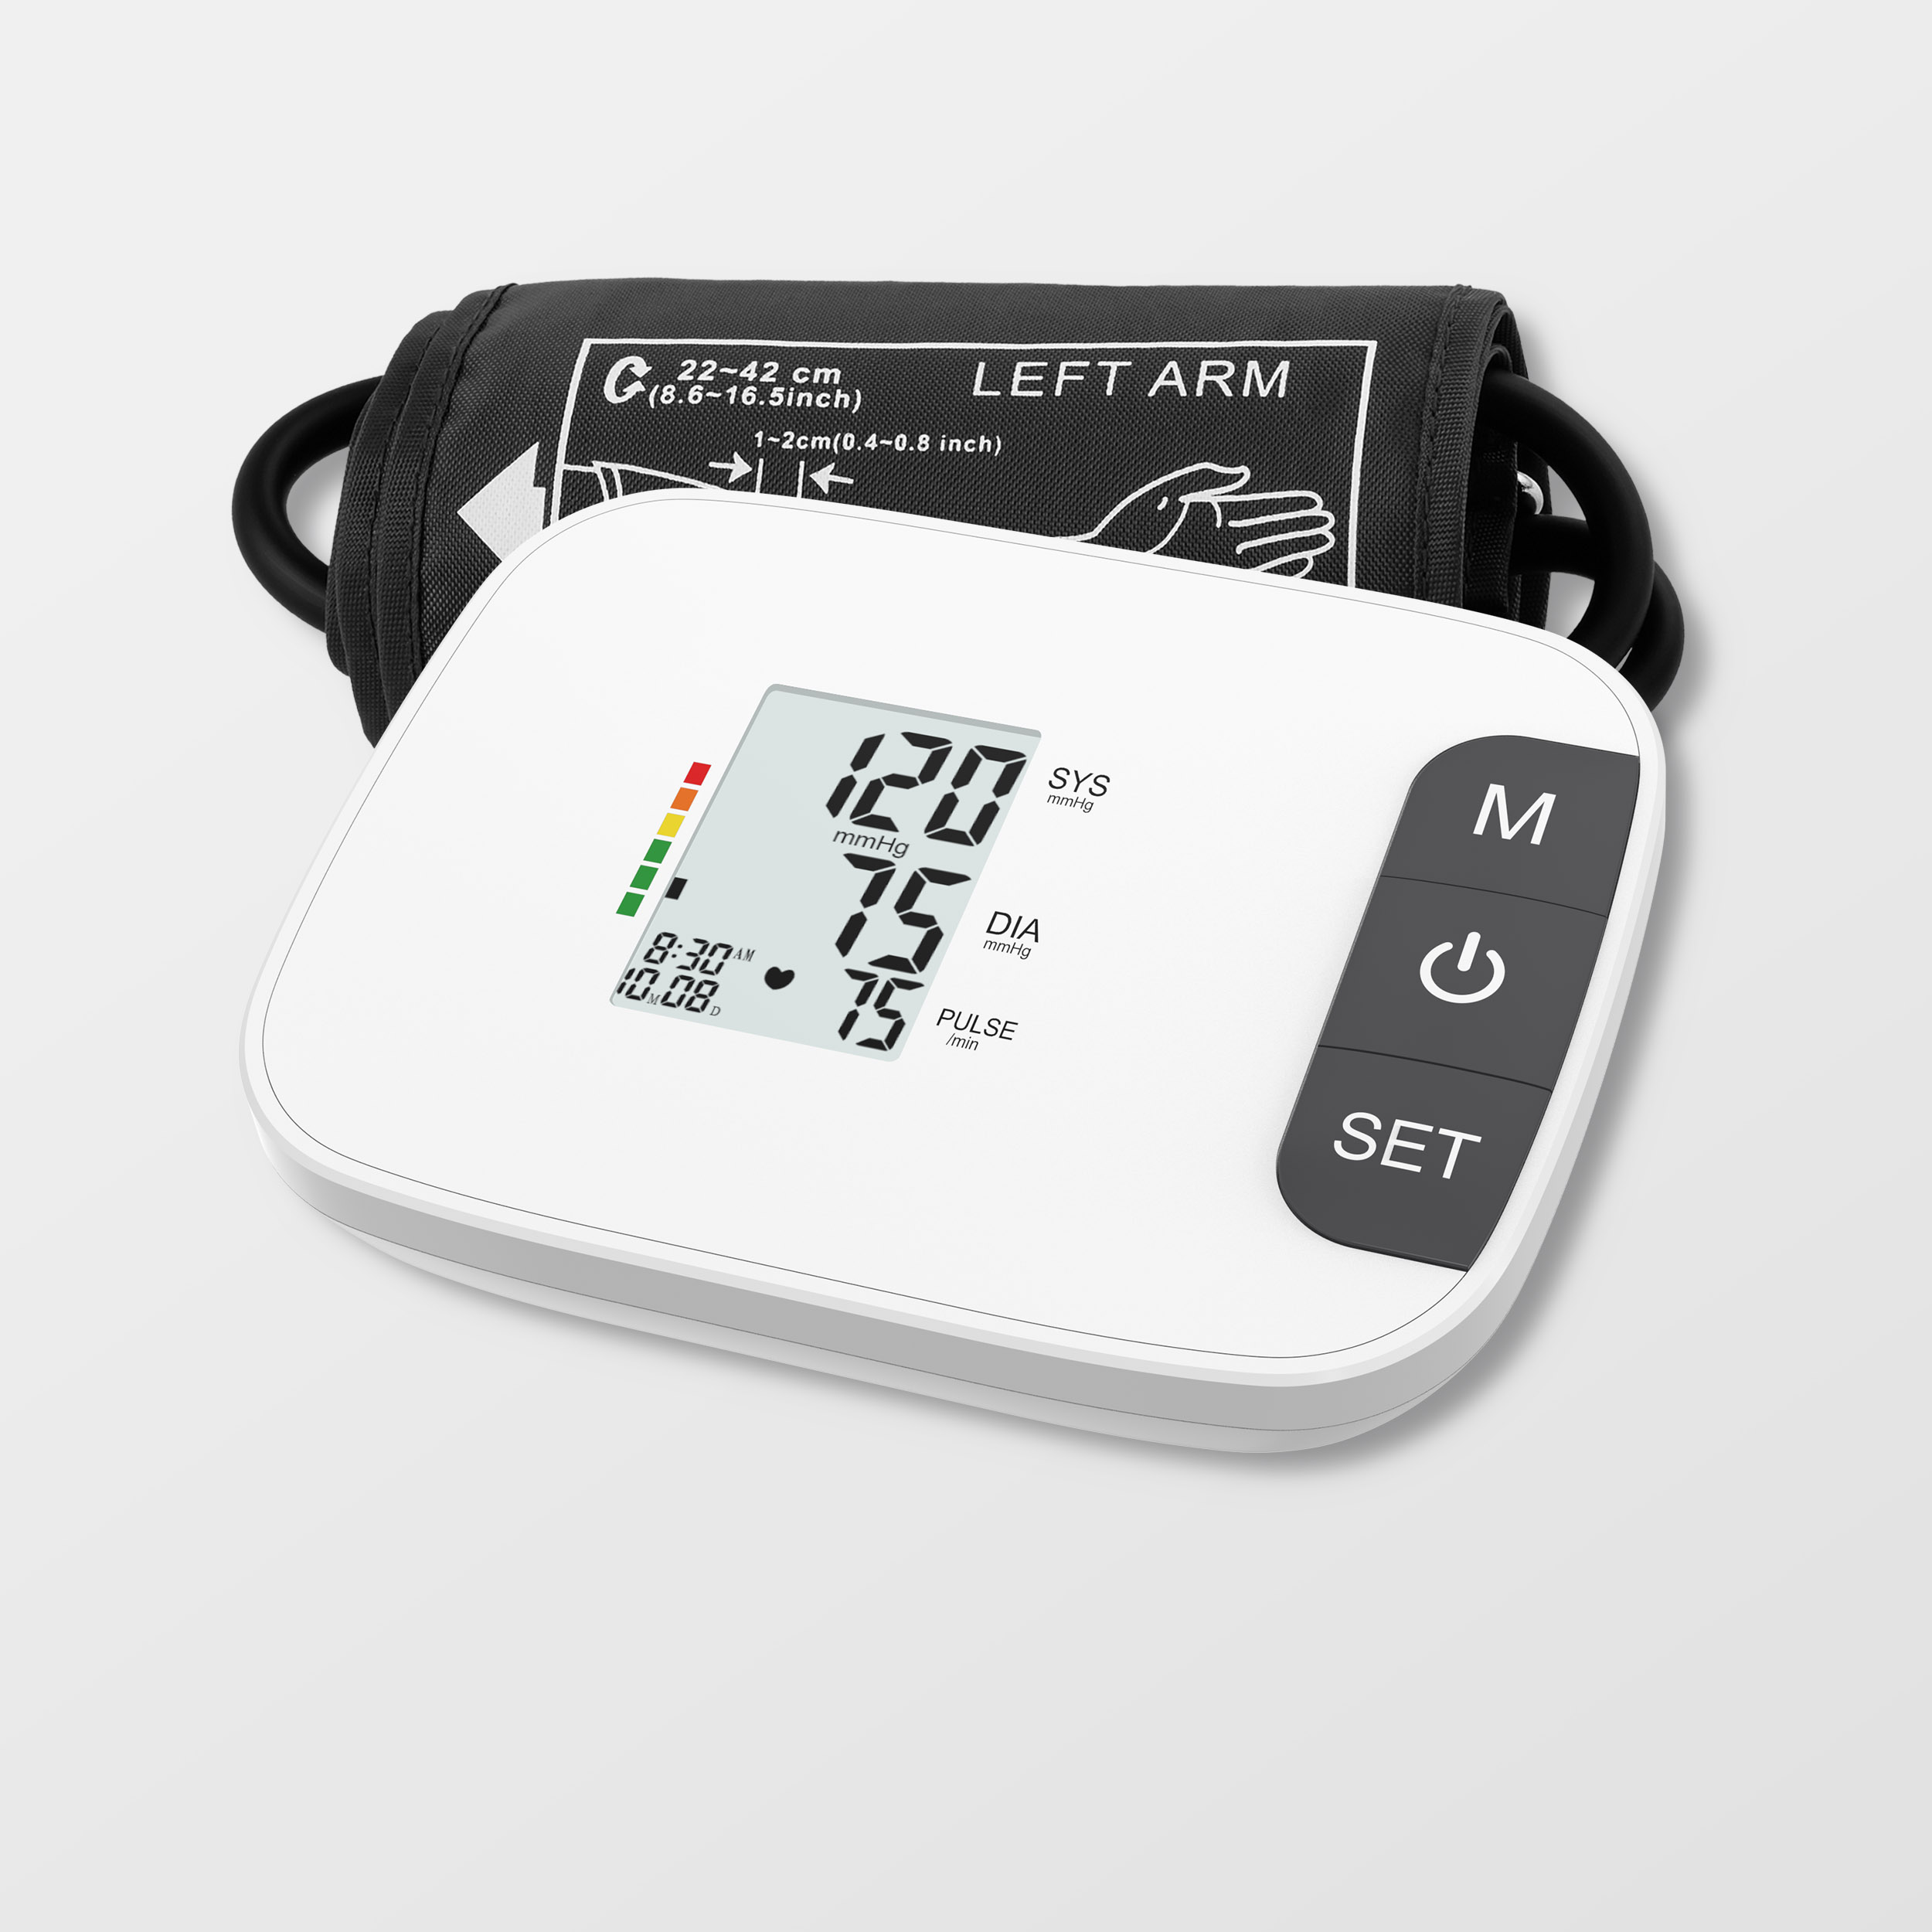 Médis Rechargeable Tekanan Darah Monitor Rechargeable Digital Tensiometer